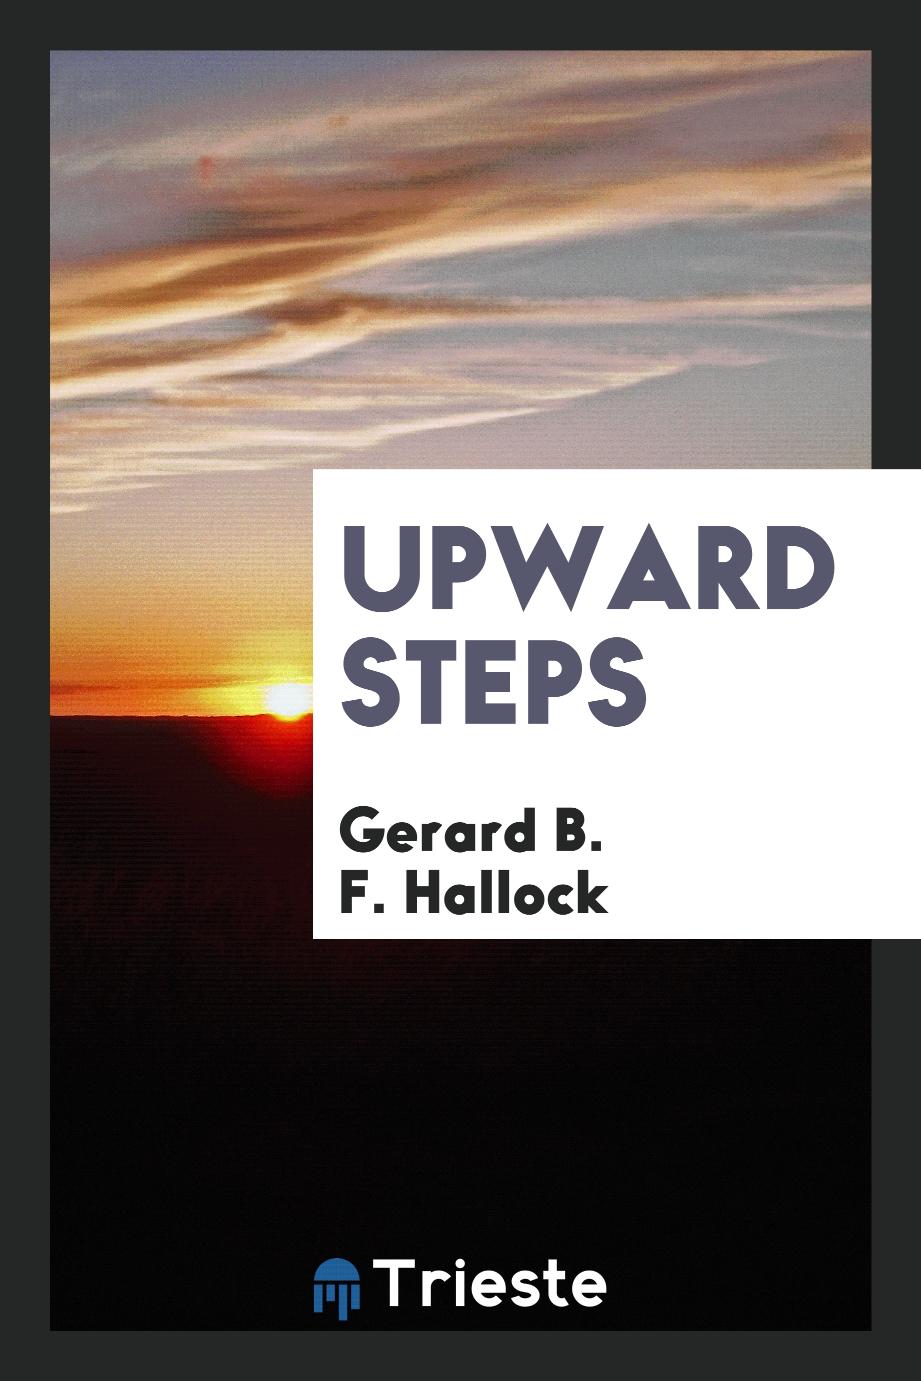 Upward steps